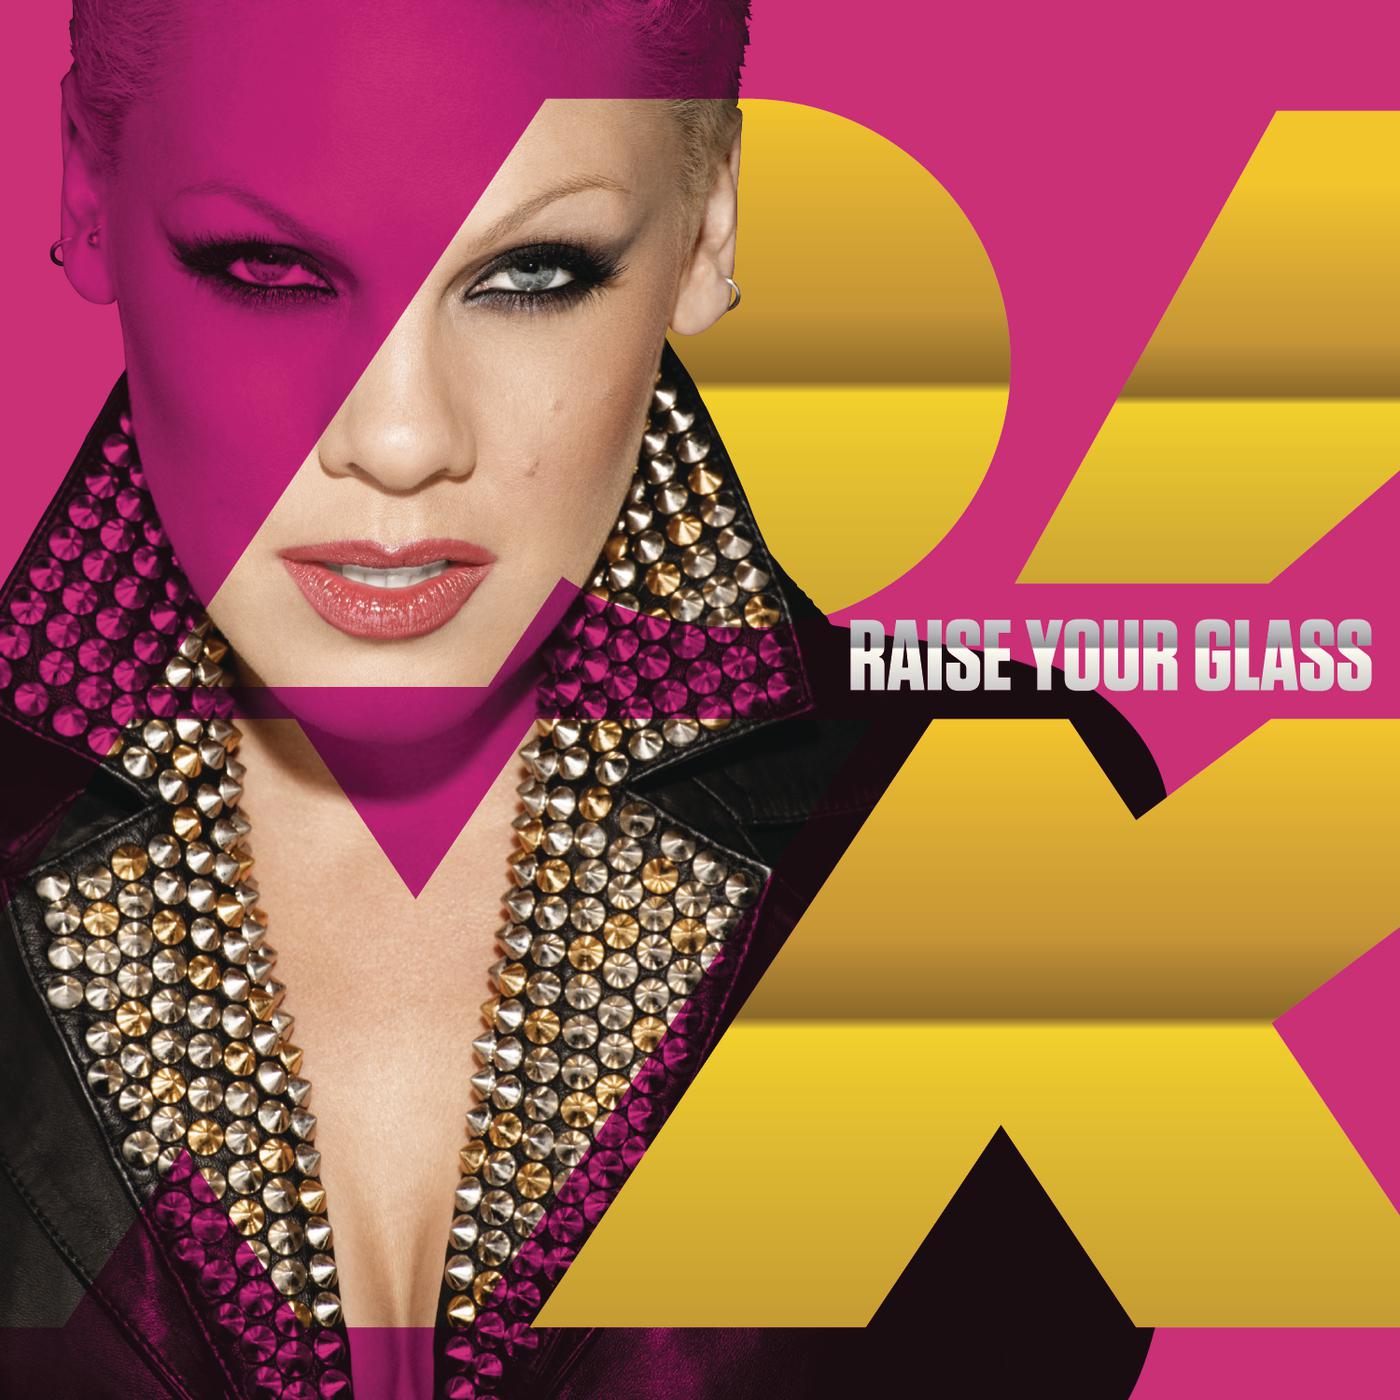 Raise Your Glass歌词 歌手P!nk-专辑Raise Your Glass-单曲《Raise Your Glass》LRC歌词下载